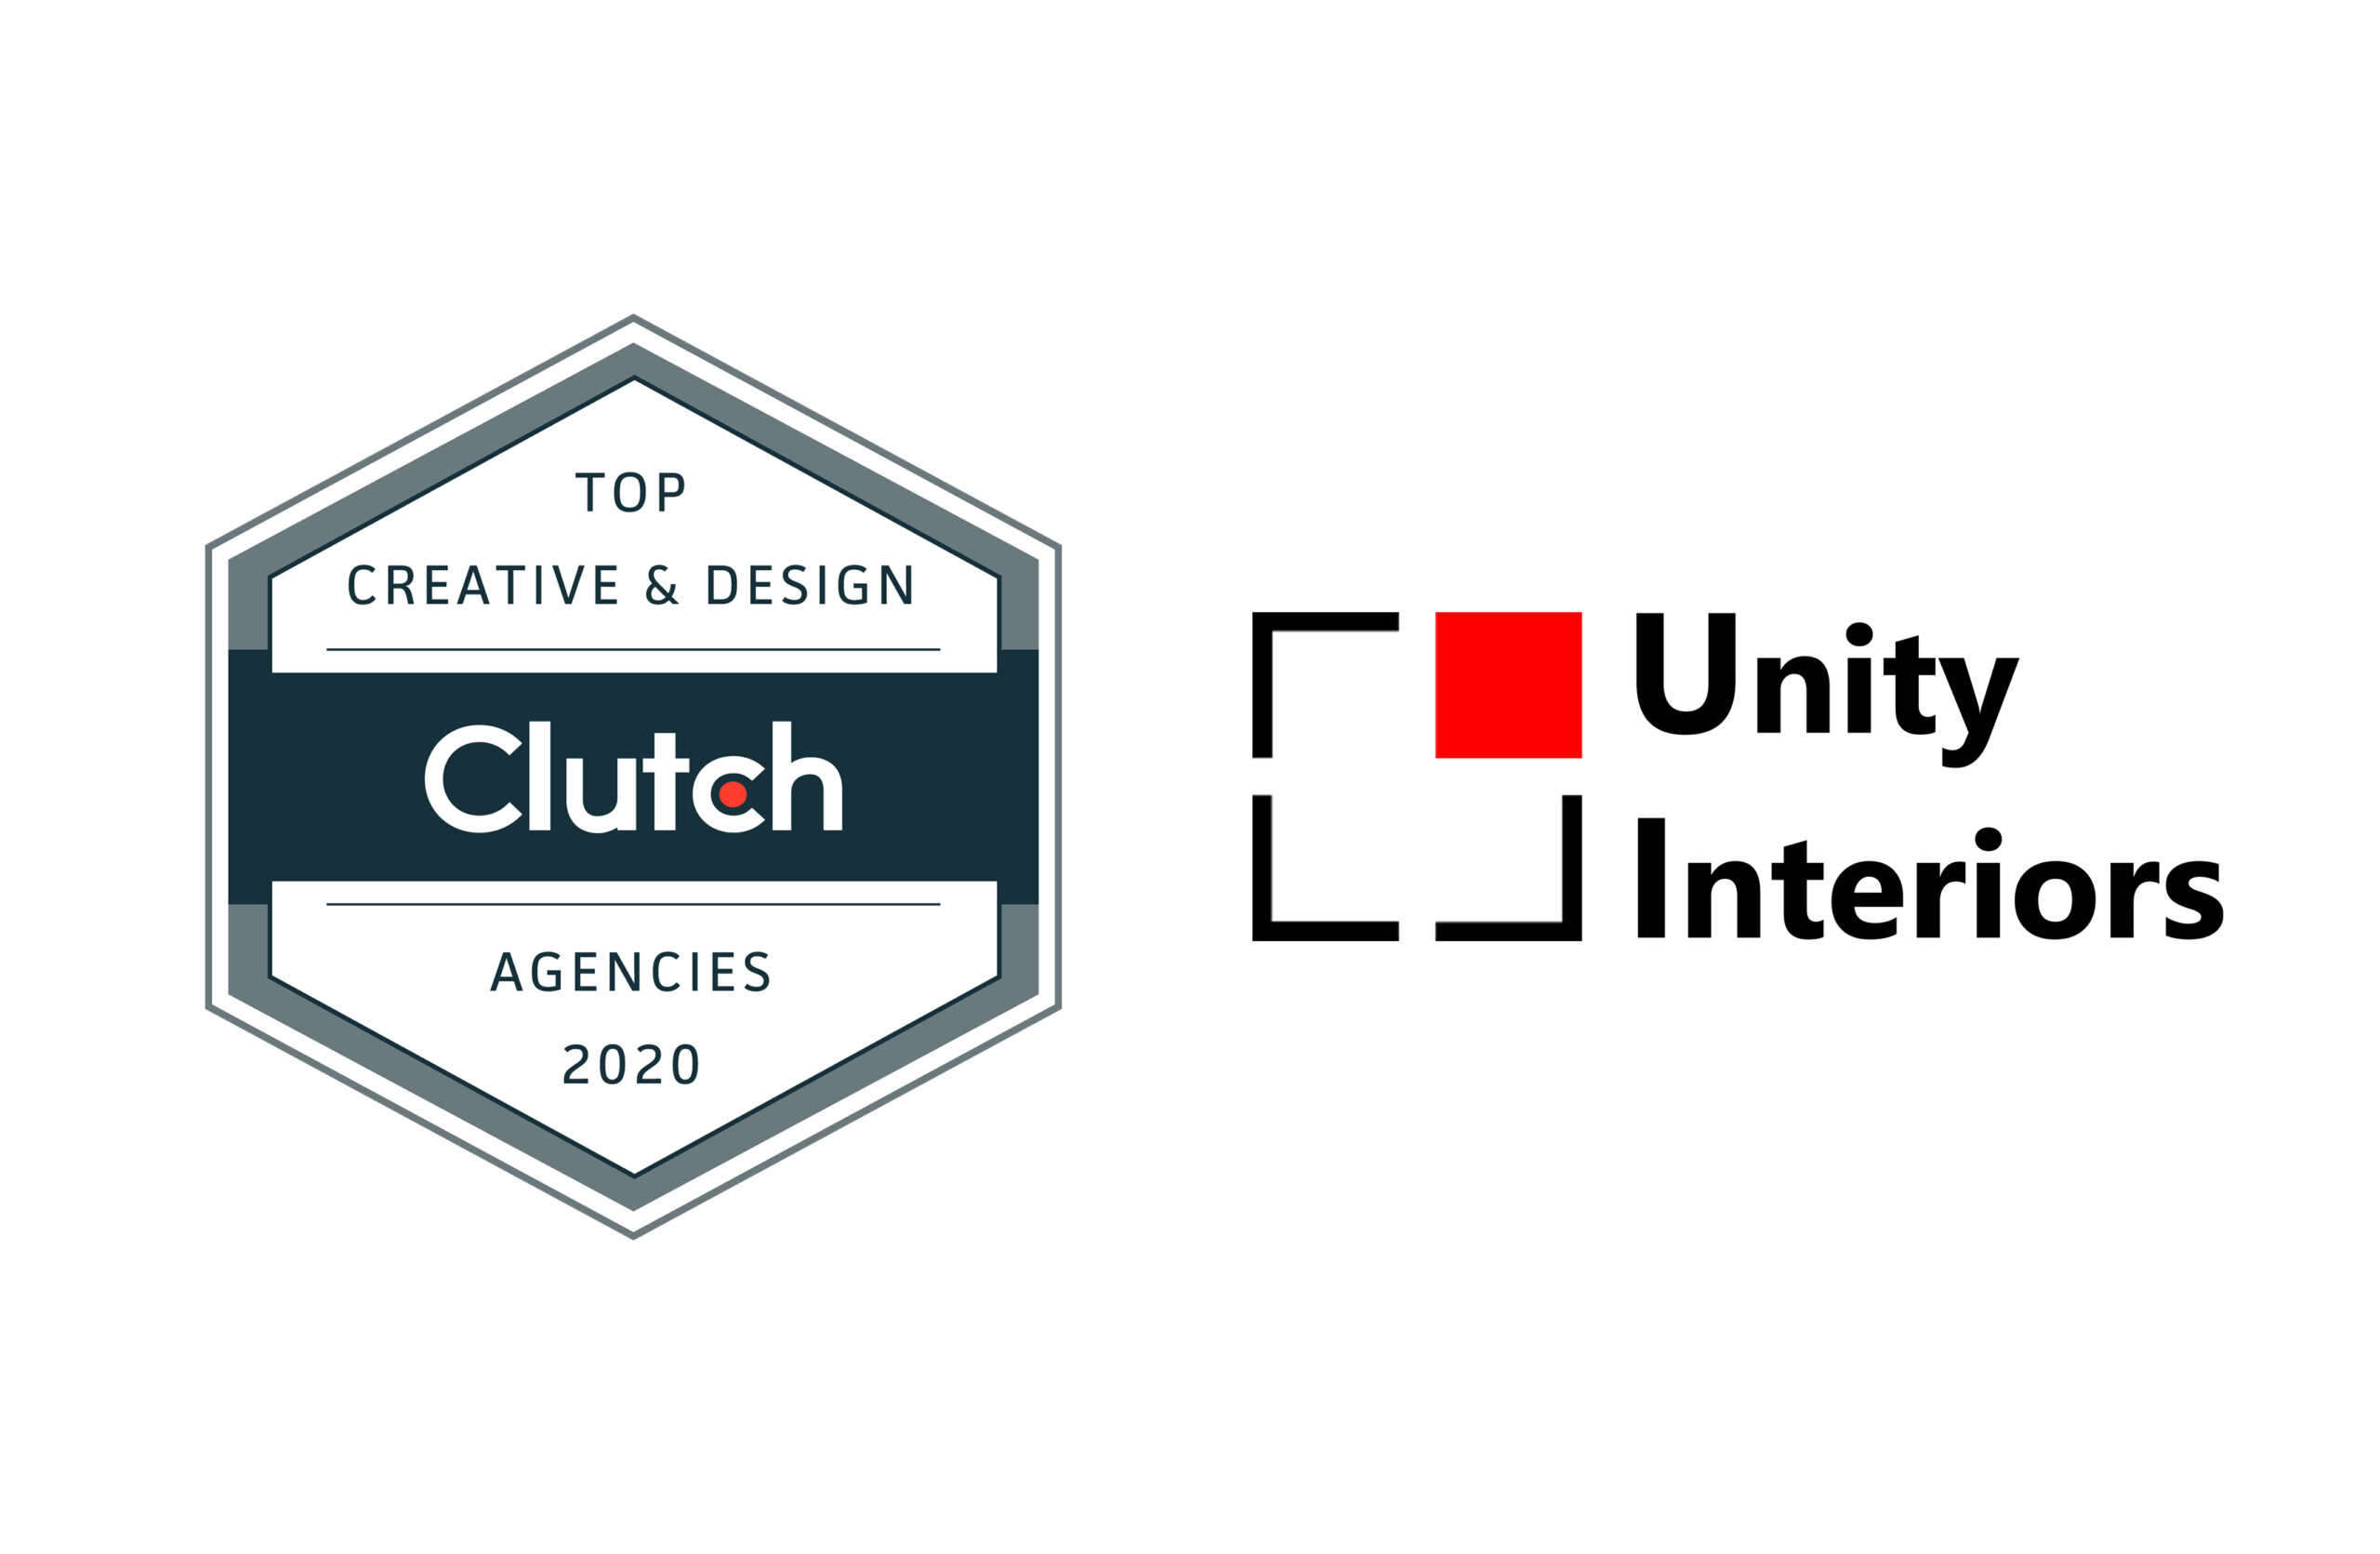 Unity Interiors wins clutch global award